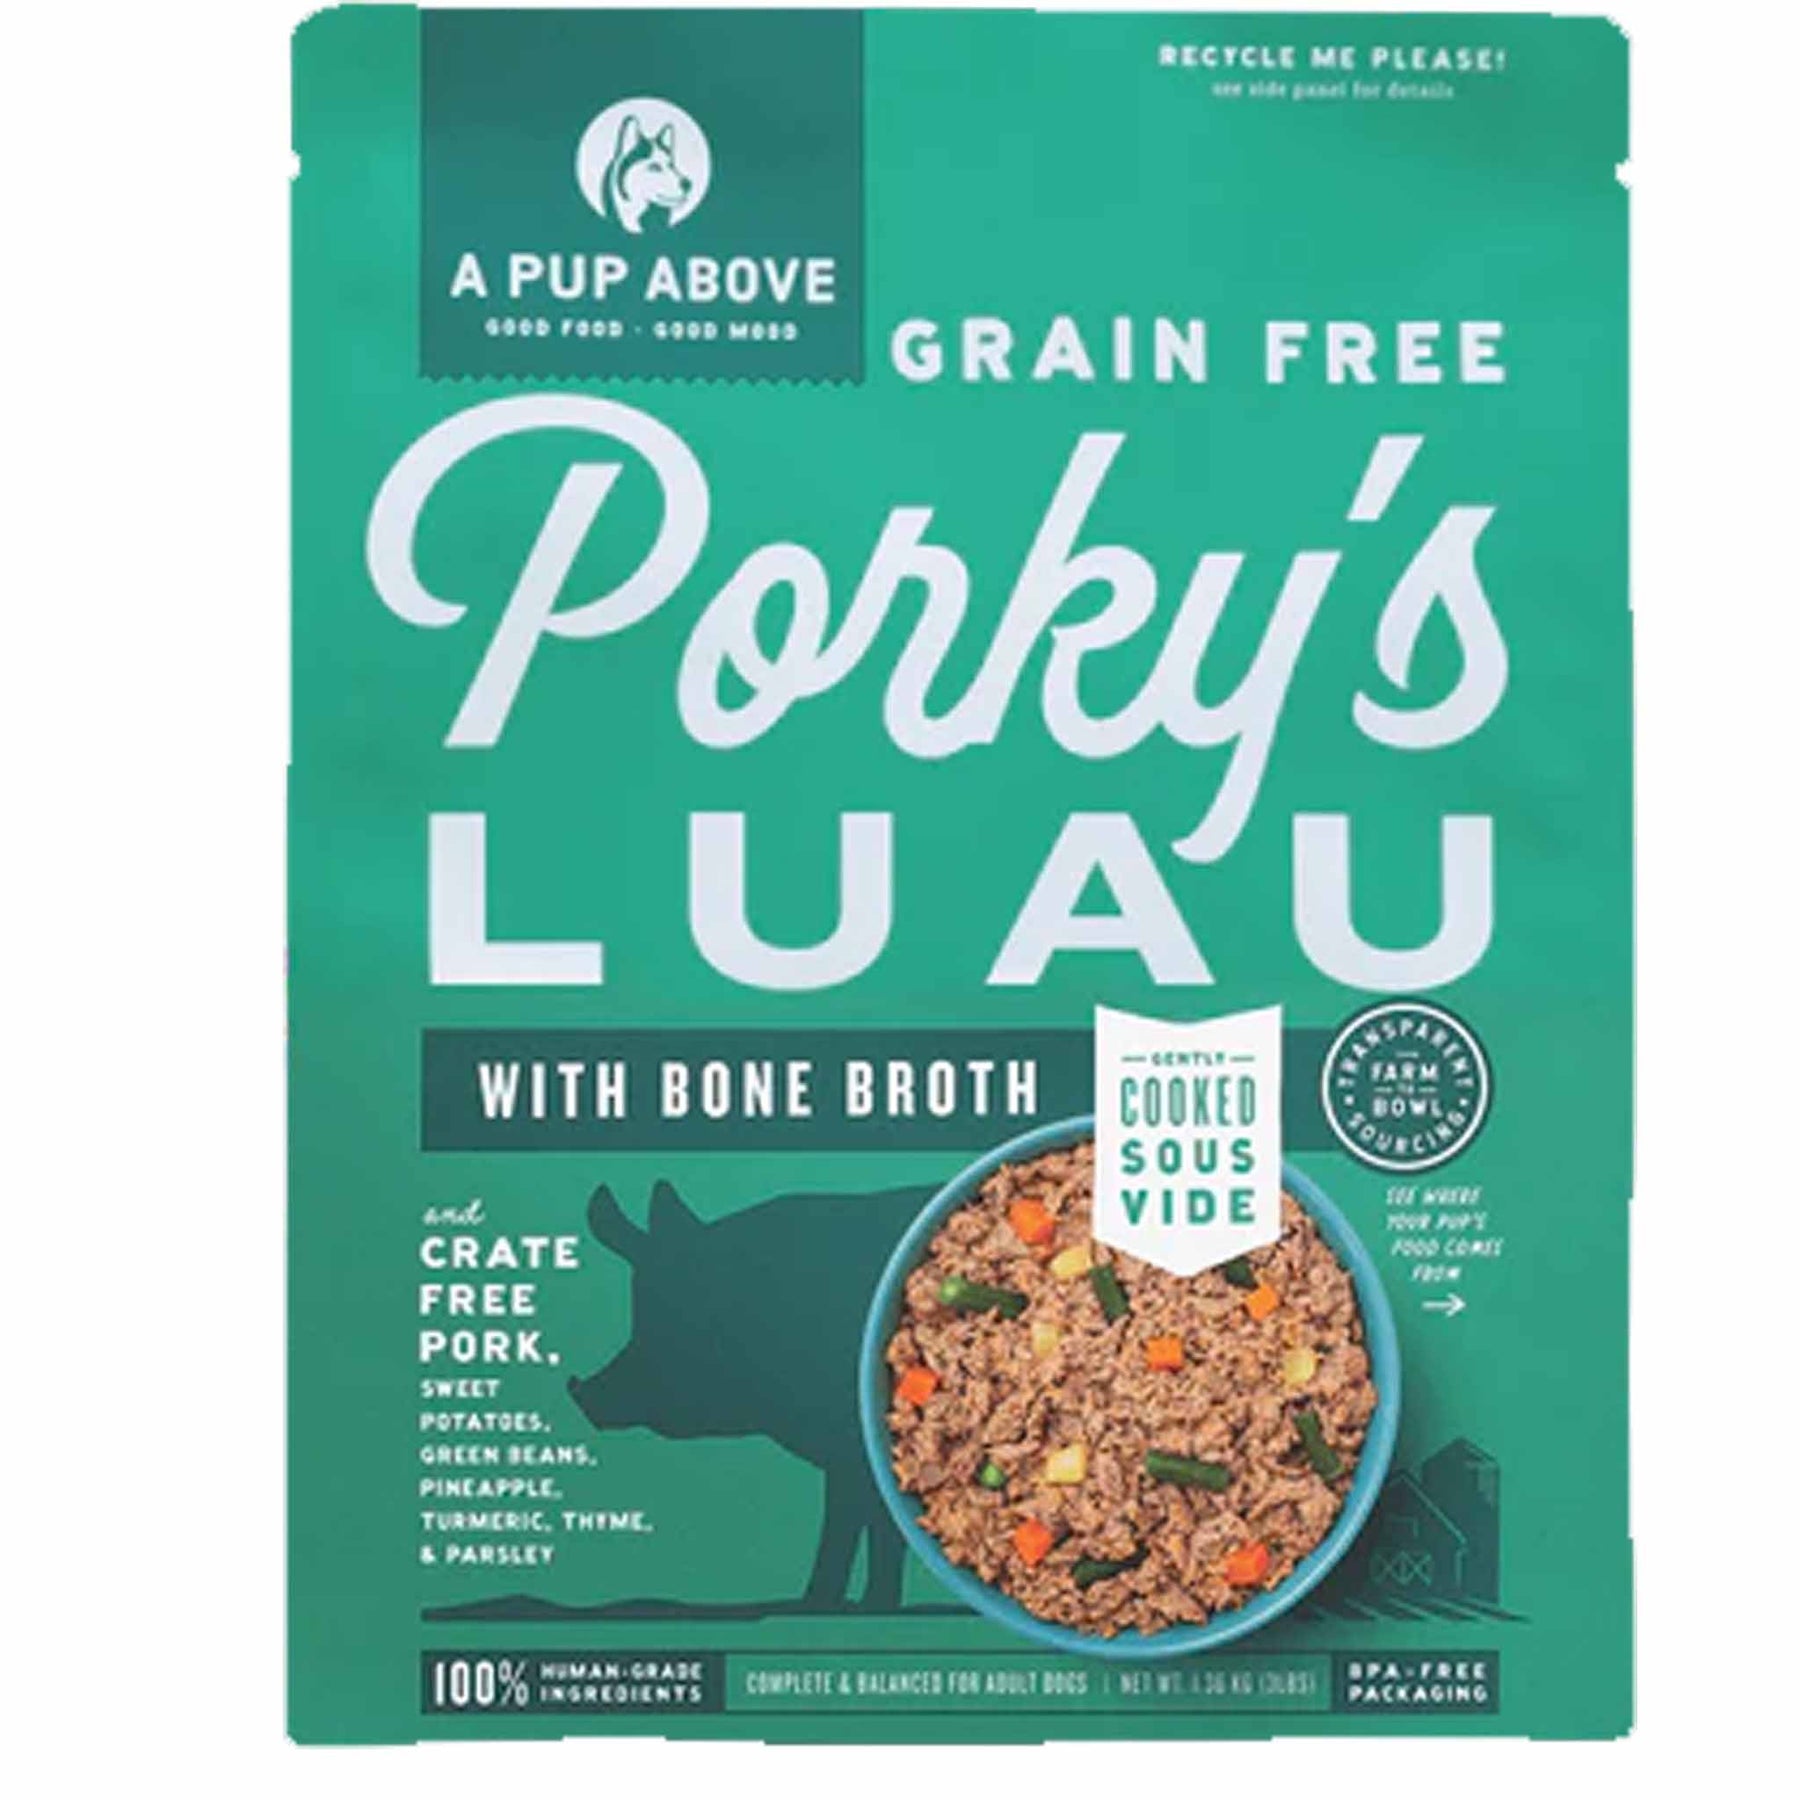 Porky's Luau